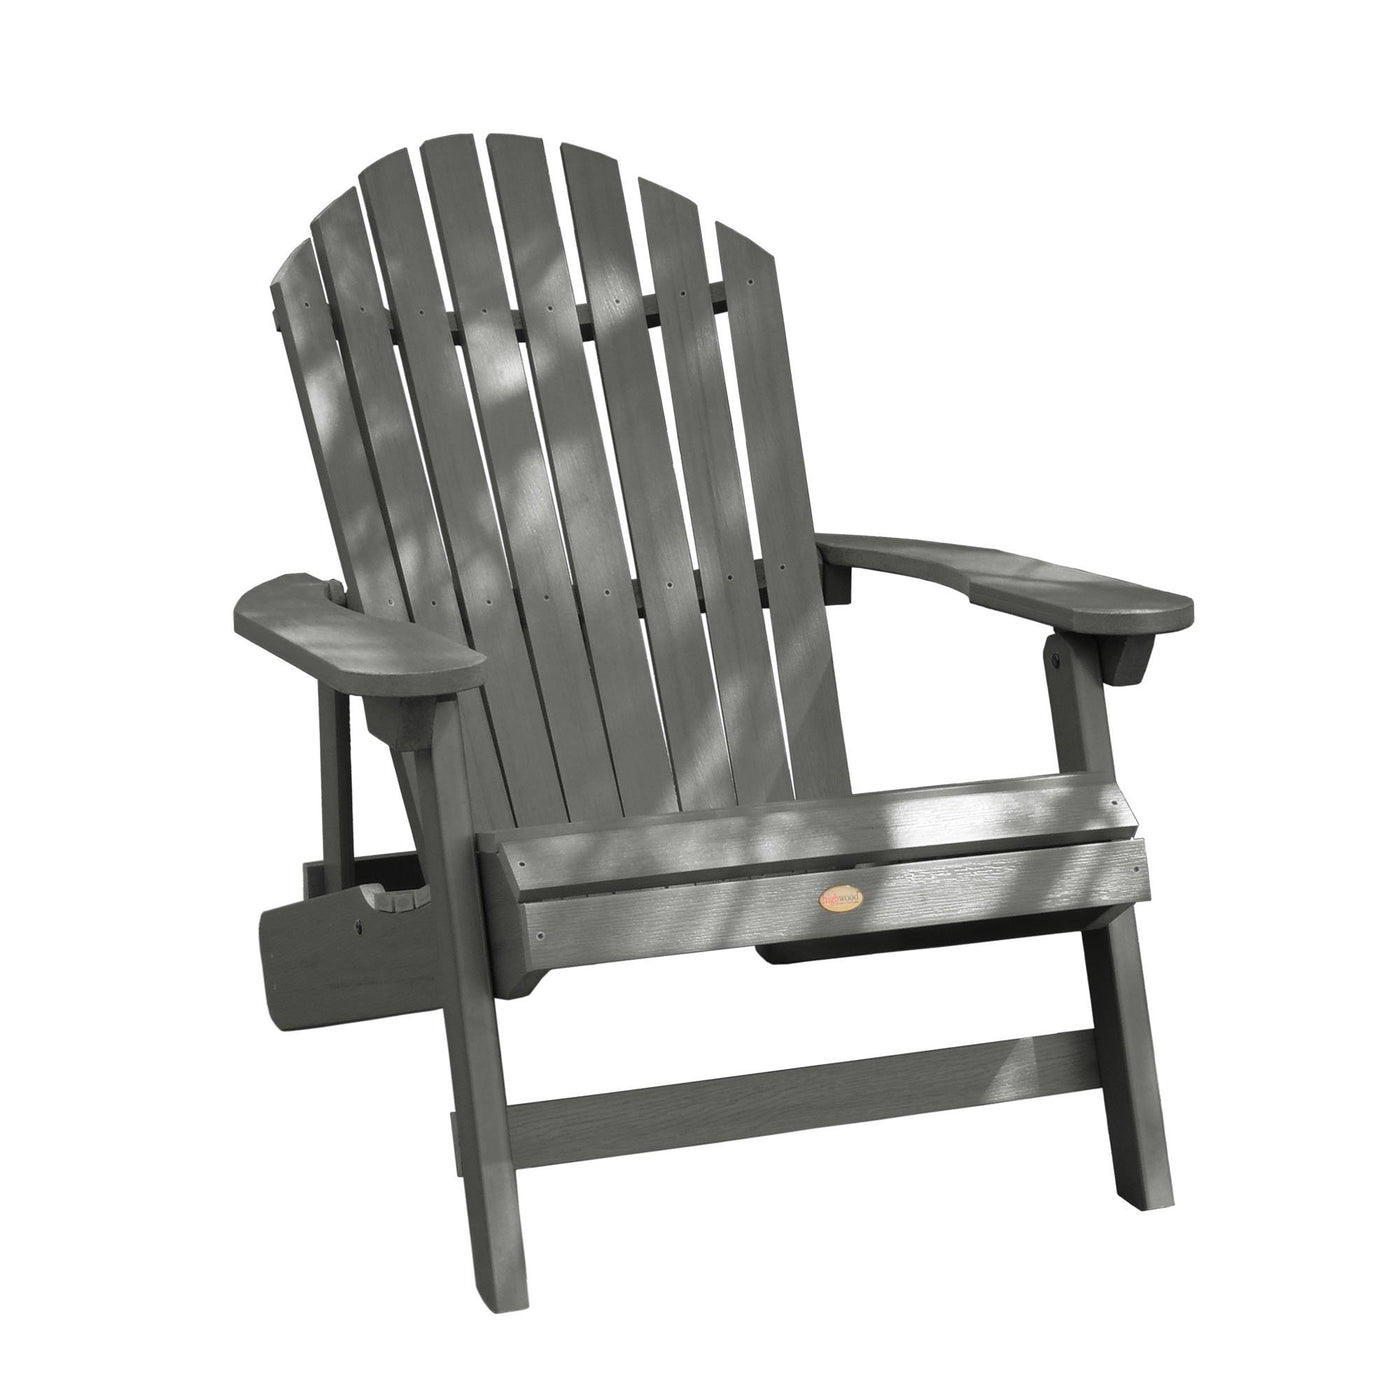 Refurbished King Hamilton Folding & Reclining Adirondack Chair Highwood USA Coastal Teak 